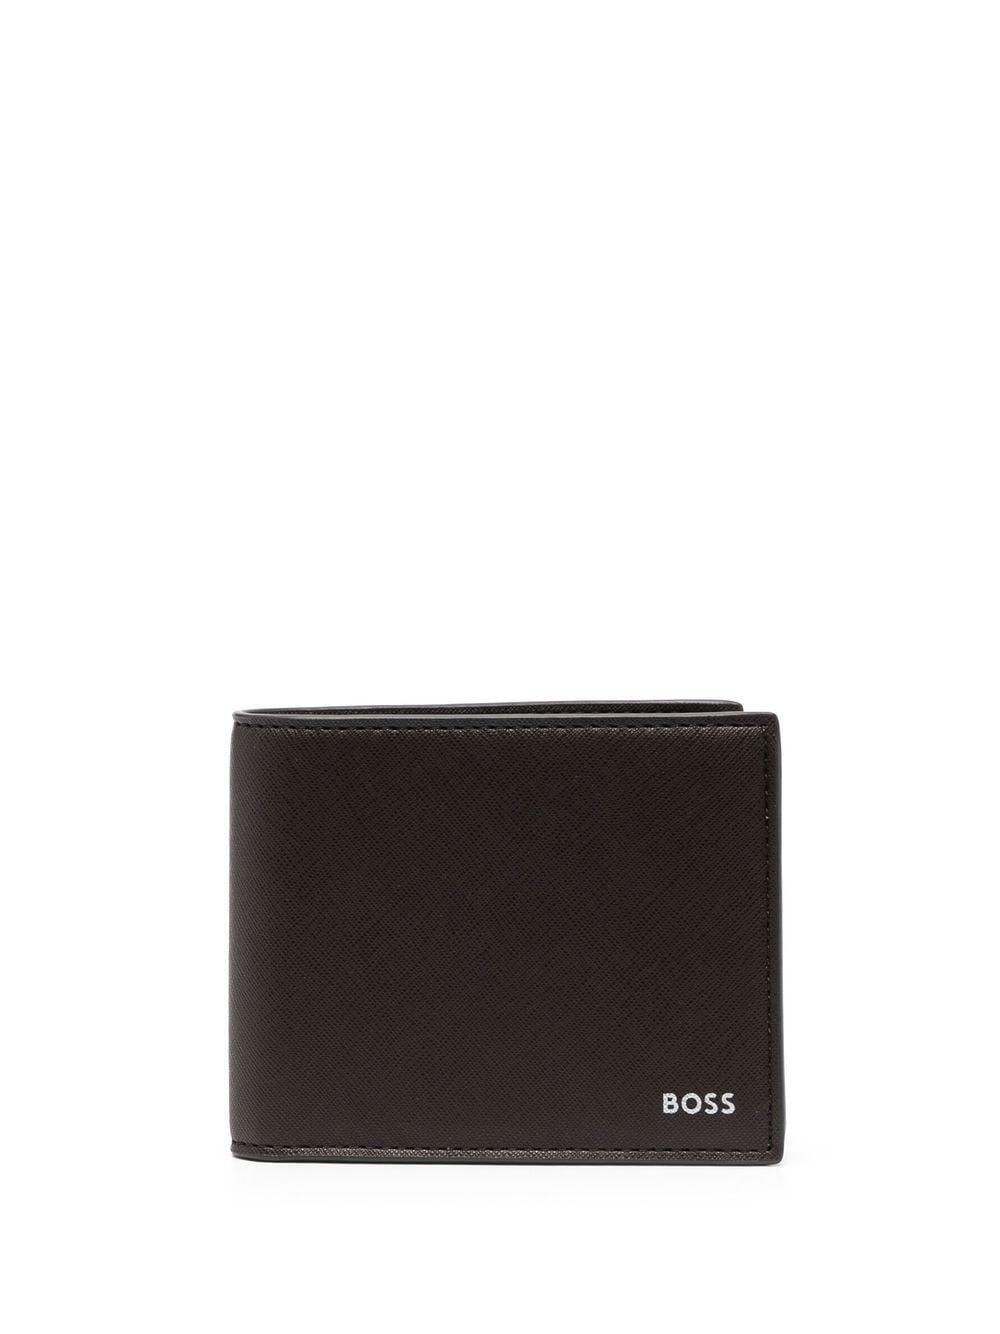 BOSS by HUGO BOSS Logo-plaque Leather Wallet in Black for Men | Lyst